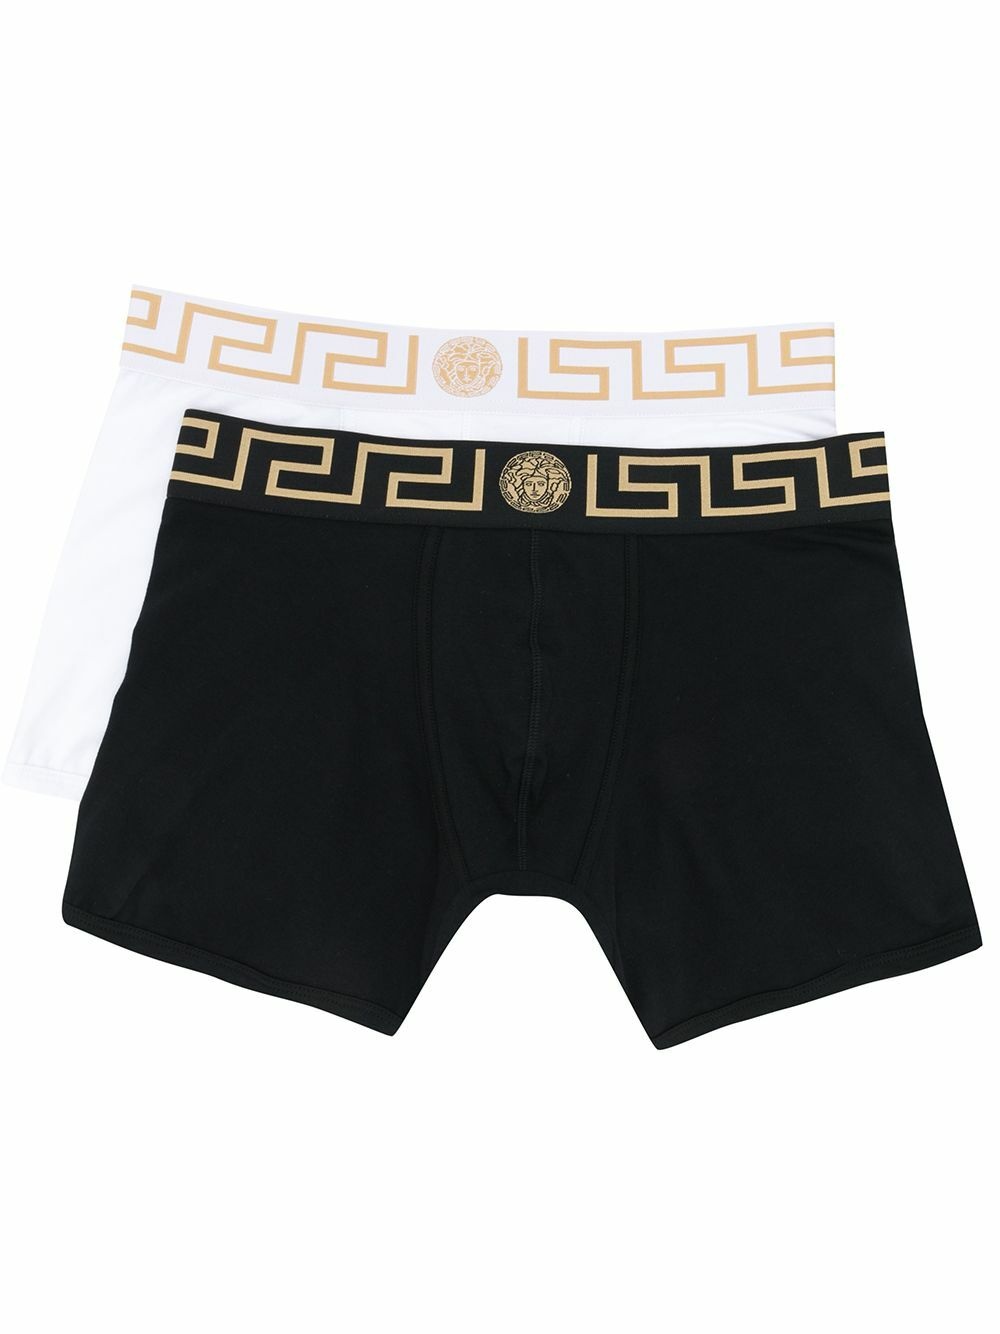 VERSACE - Greca Border Boxer Shorts 2-pack Versace